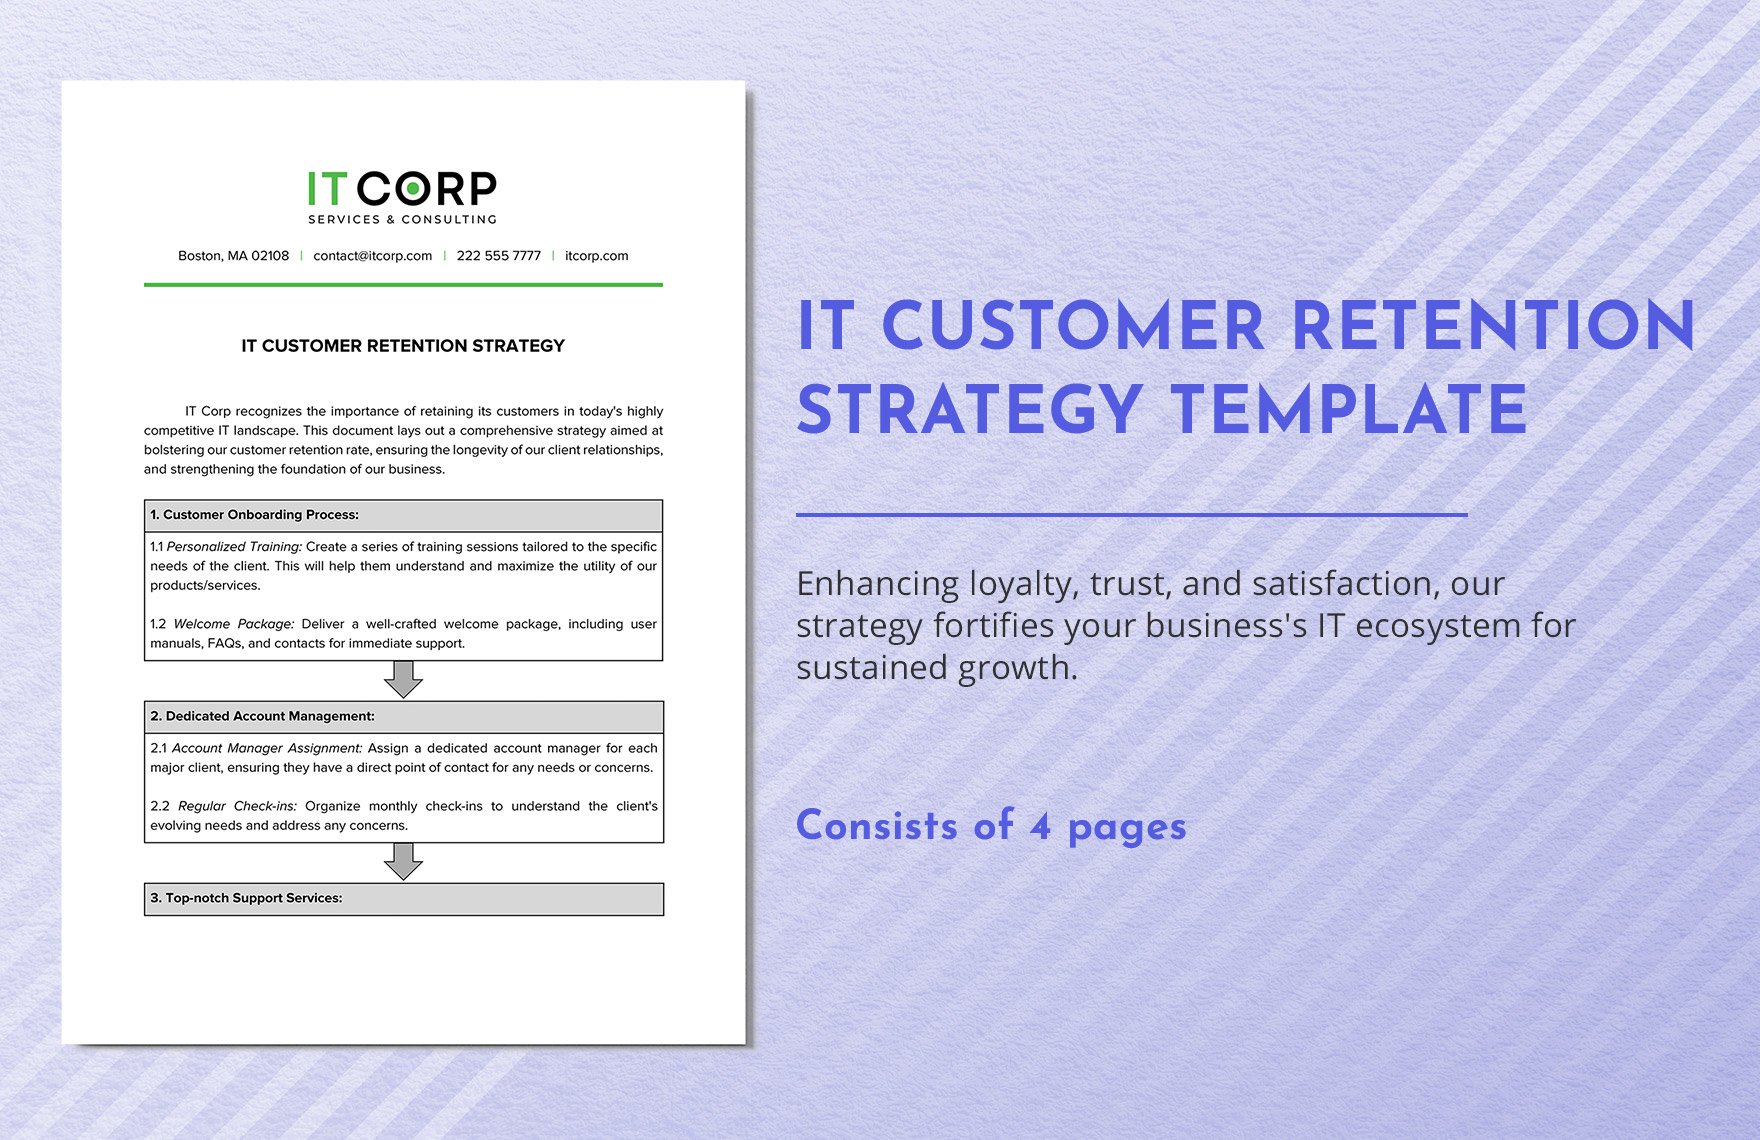 IT Customer Retention Strategy Template